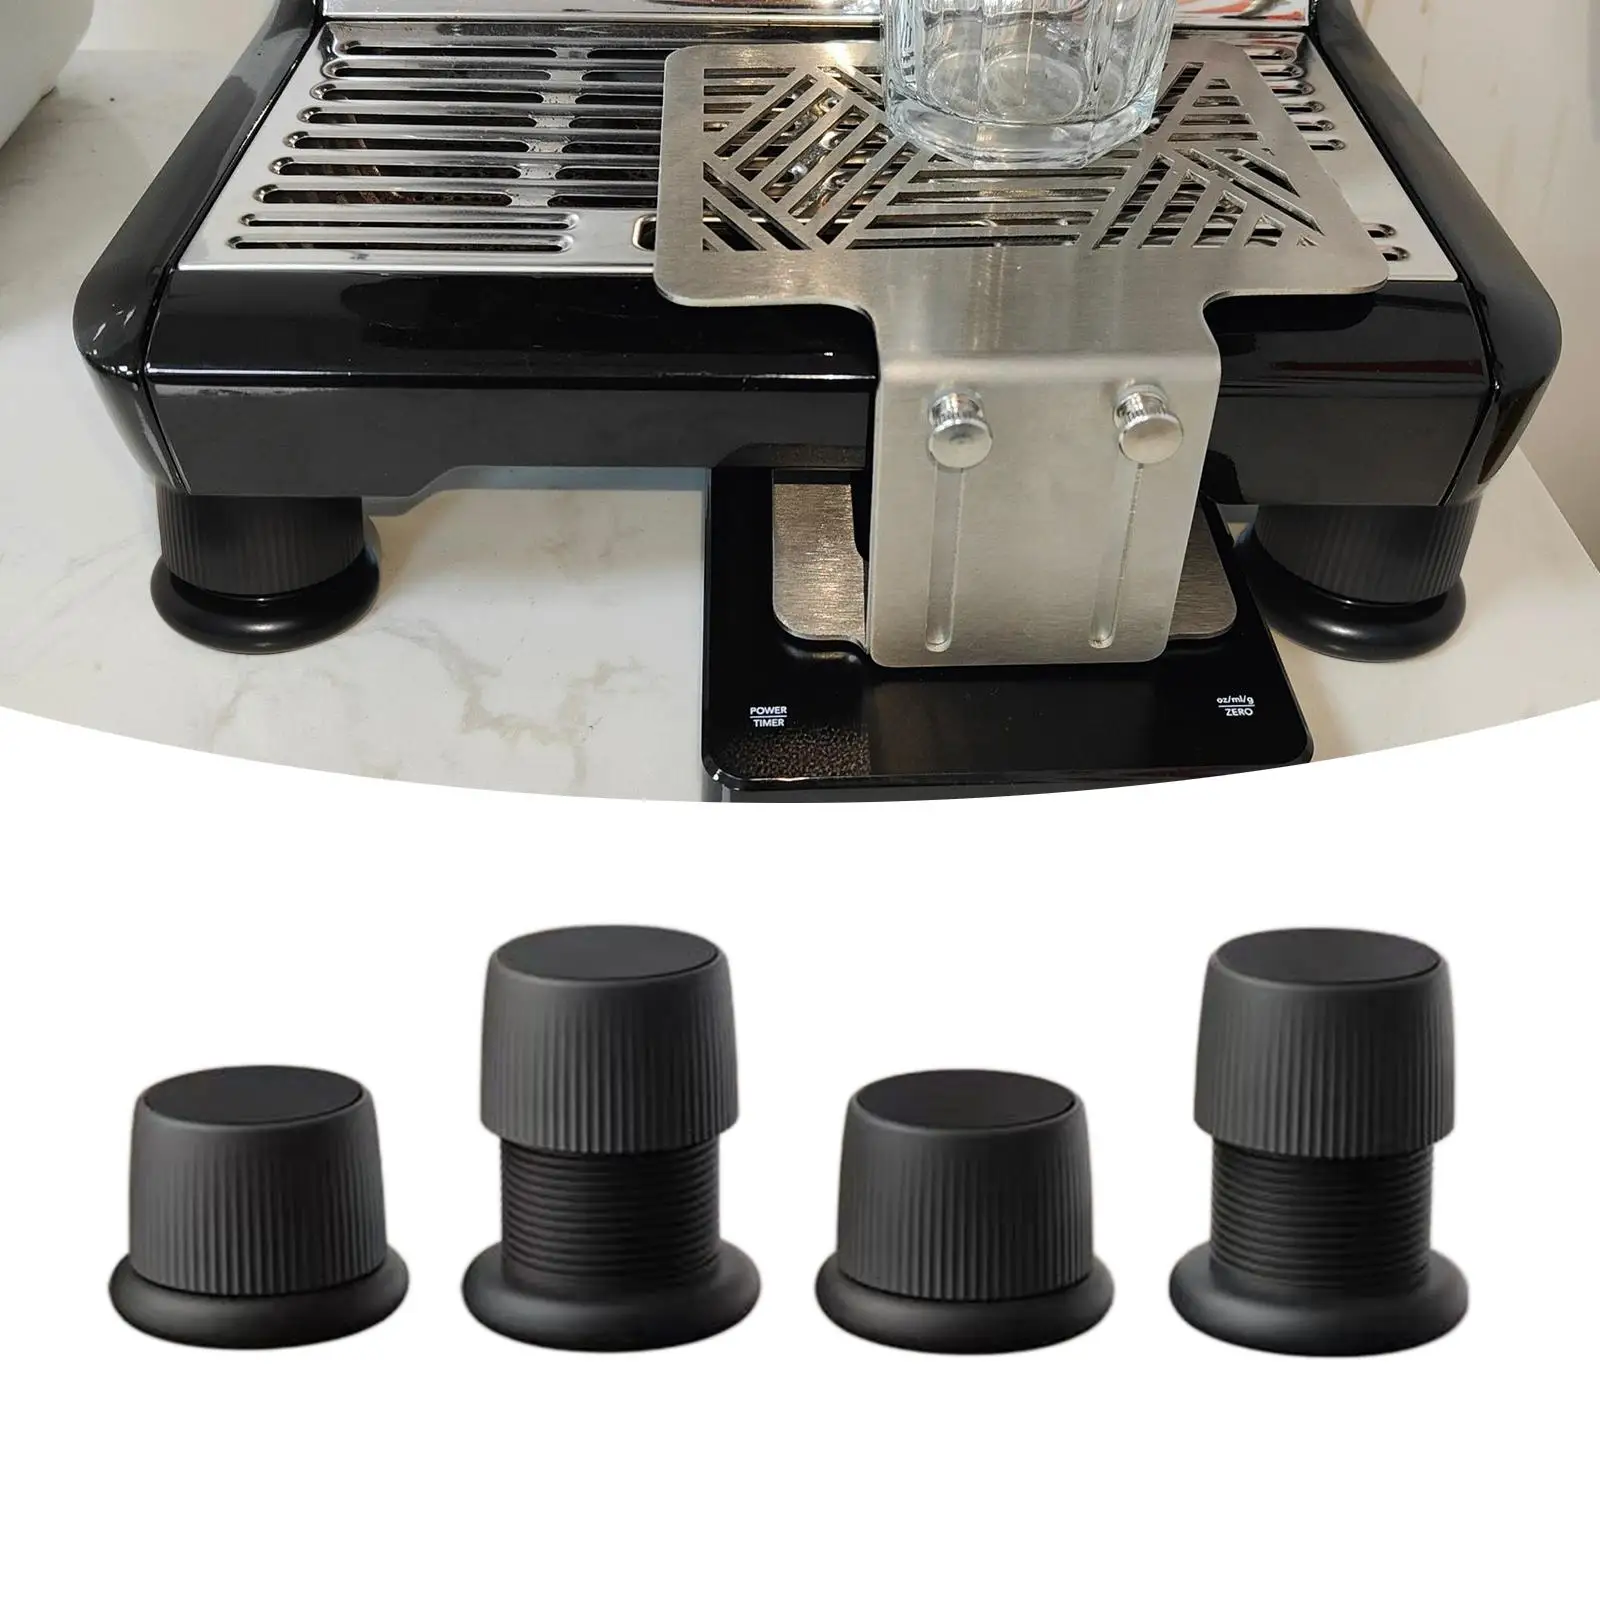 4Pcs Heighten Support Protects Pedestals Anti Walk for Espresso Machine